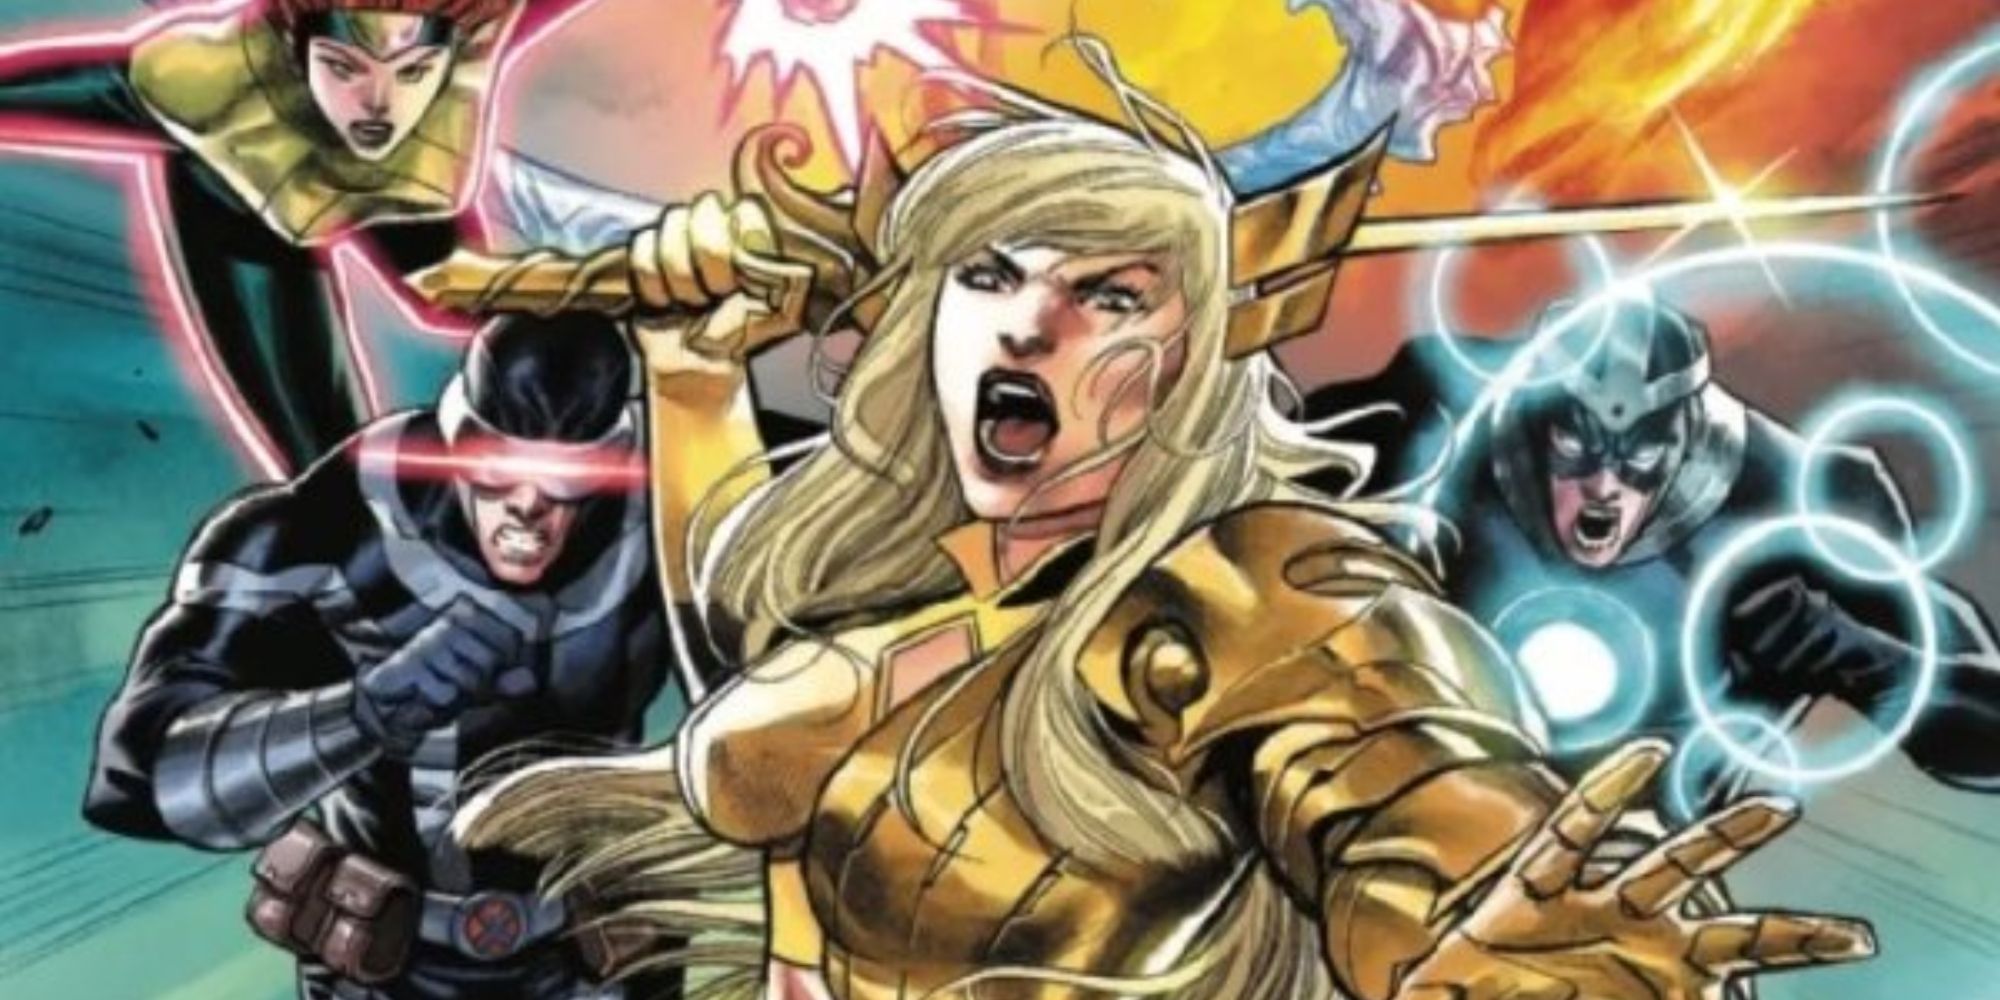 The cover to Marvel Comics' X-Men #17 featuring Jean Grey, Cyclops, Magik, and Havok